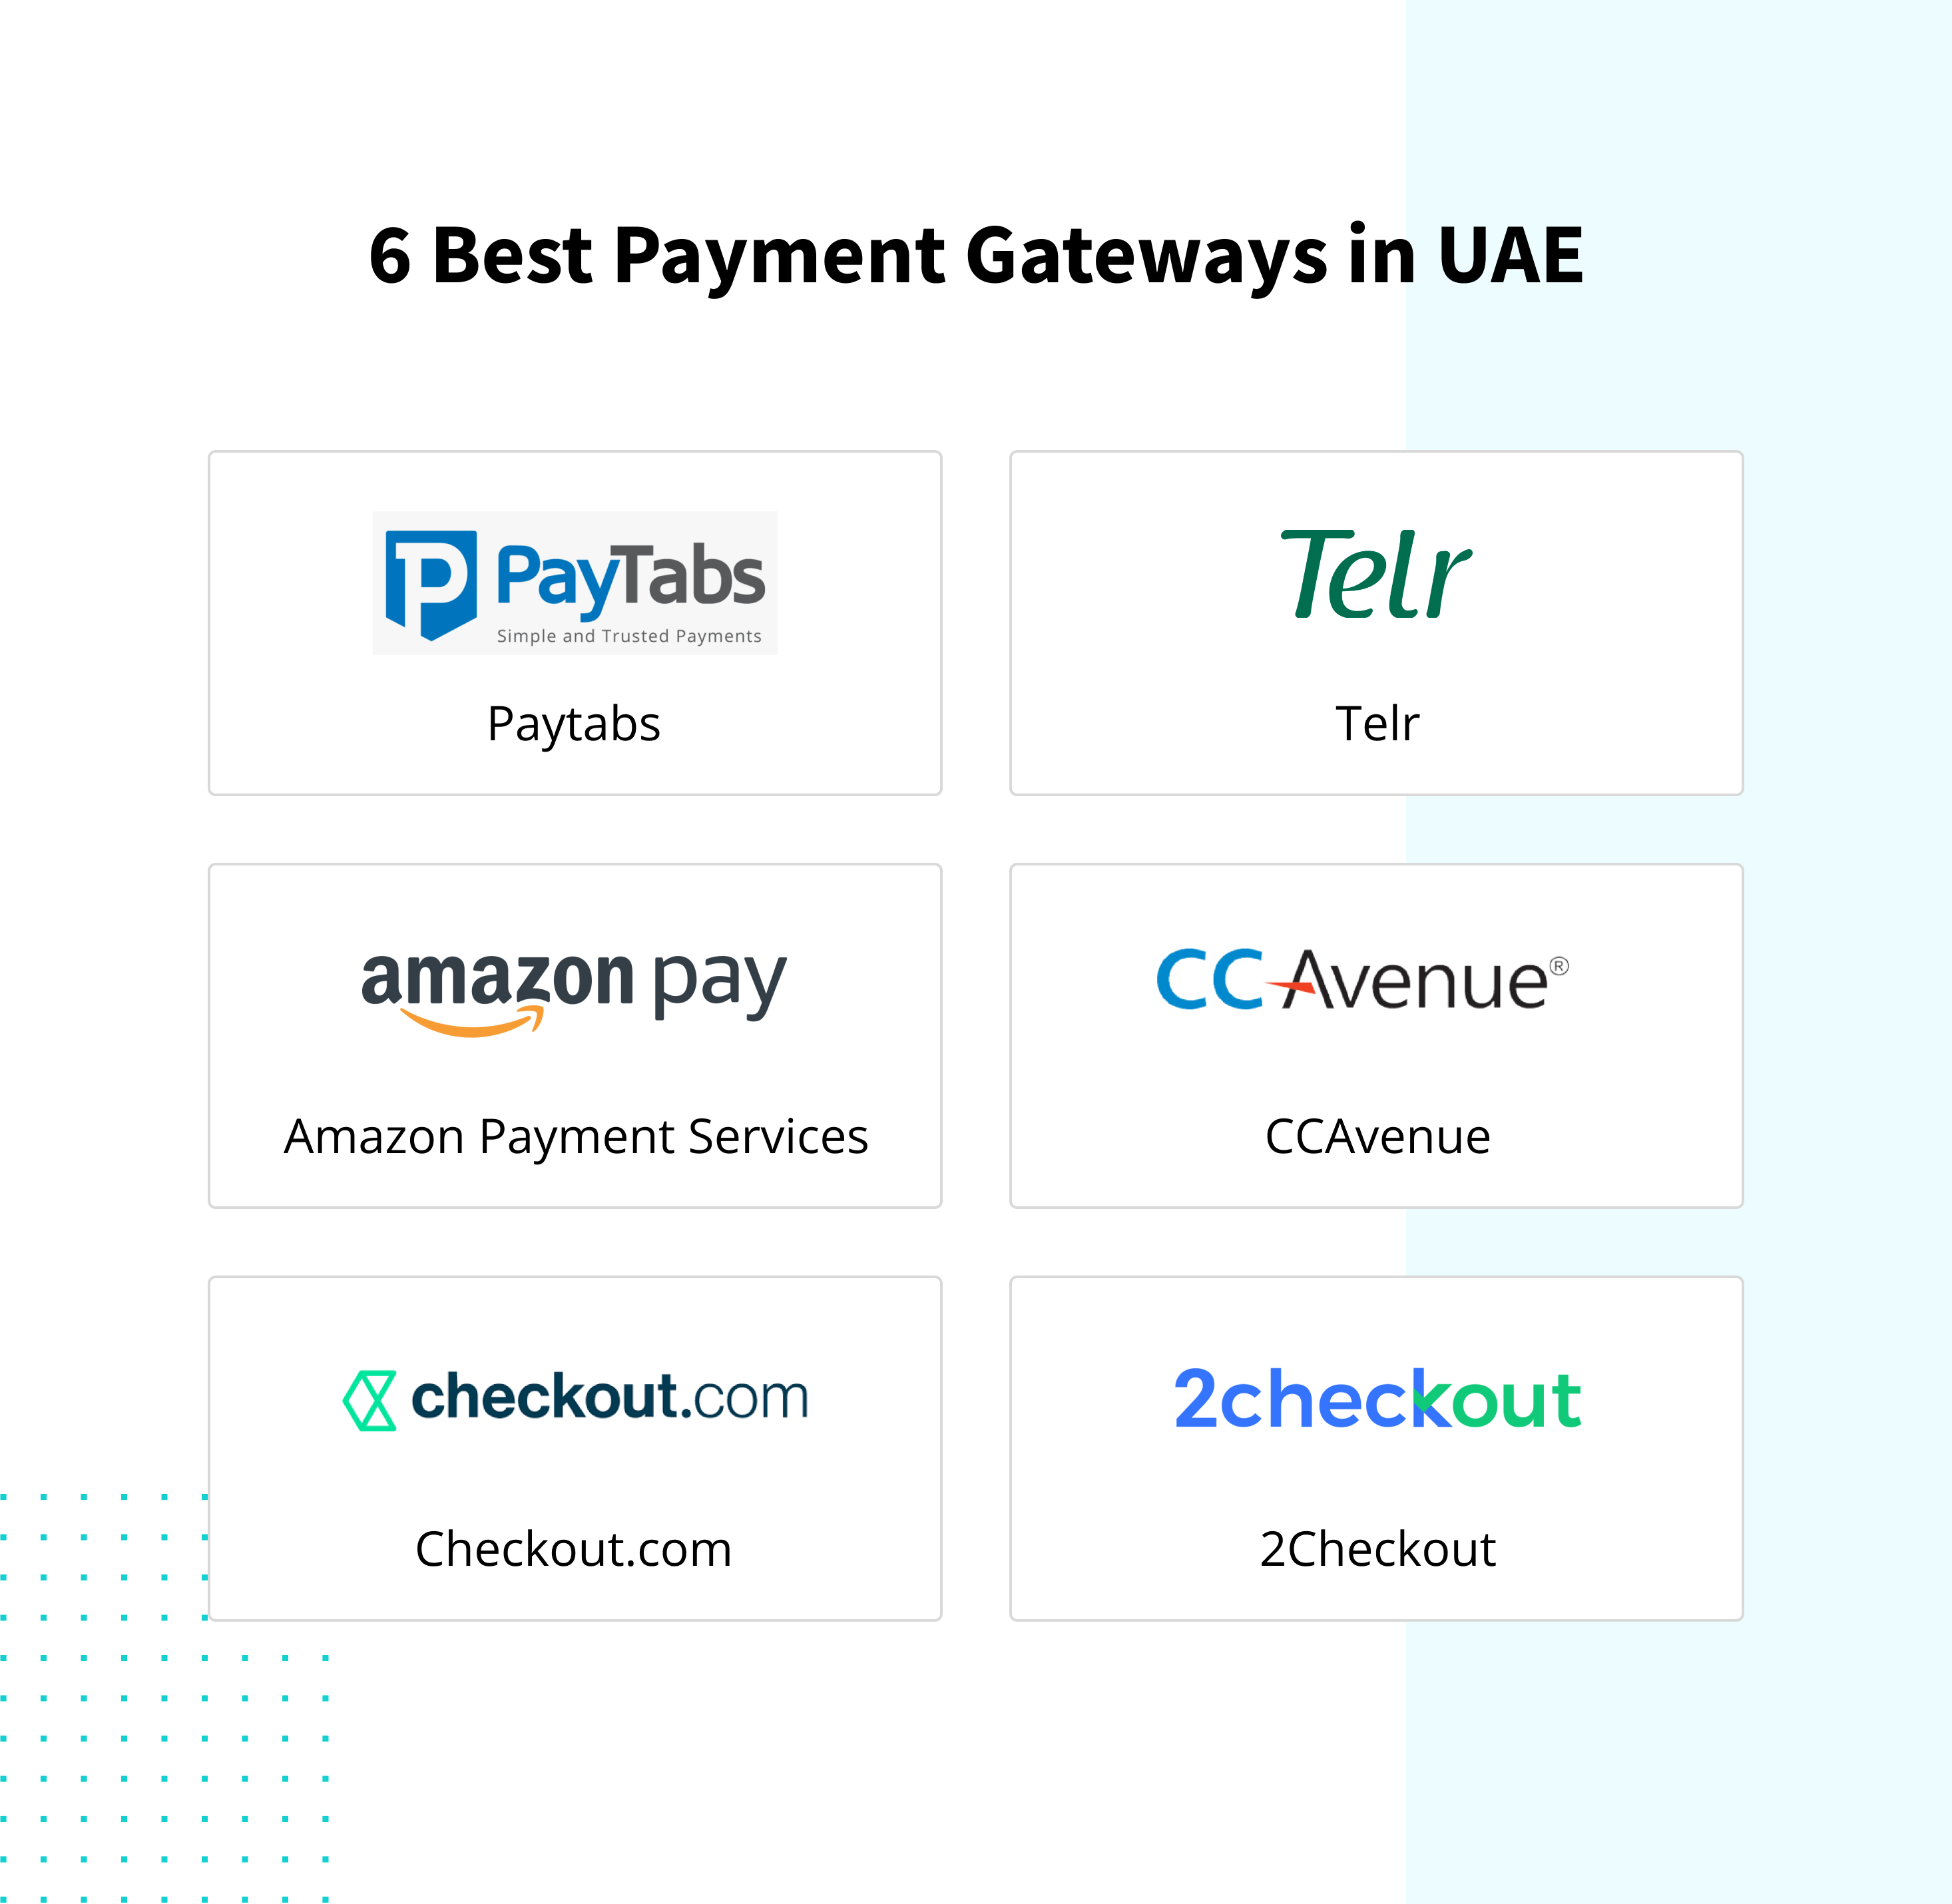 6 Best Payment Gateways in UAE